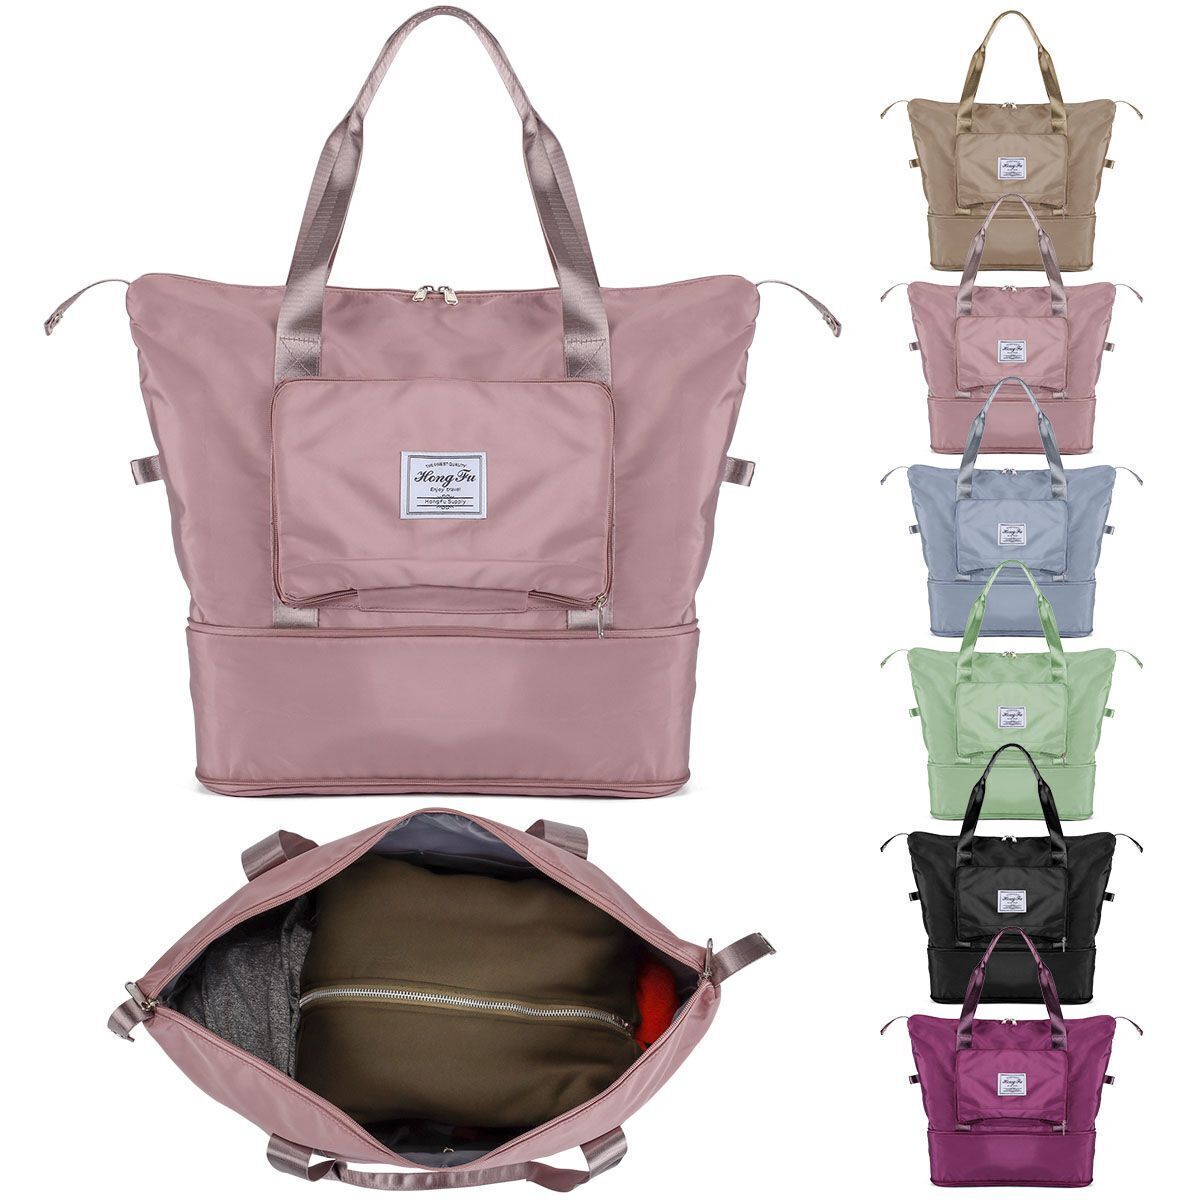 S Waterproof Tote Duffle Bag Handbag Large Capacity Travel U